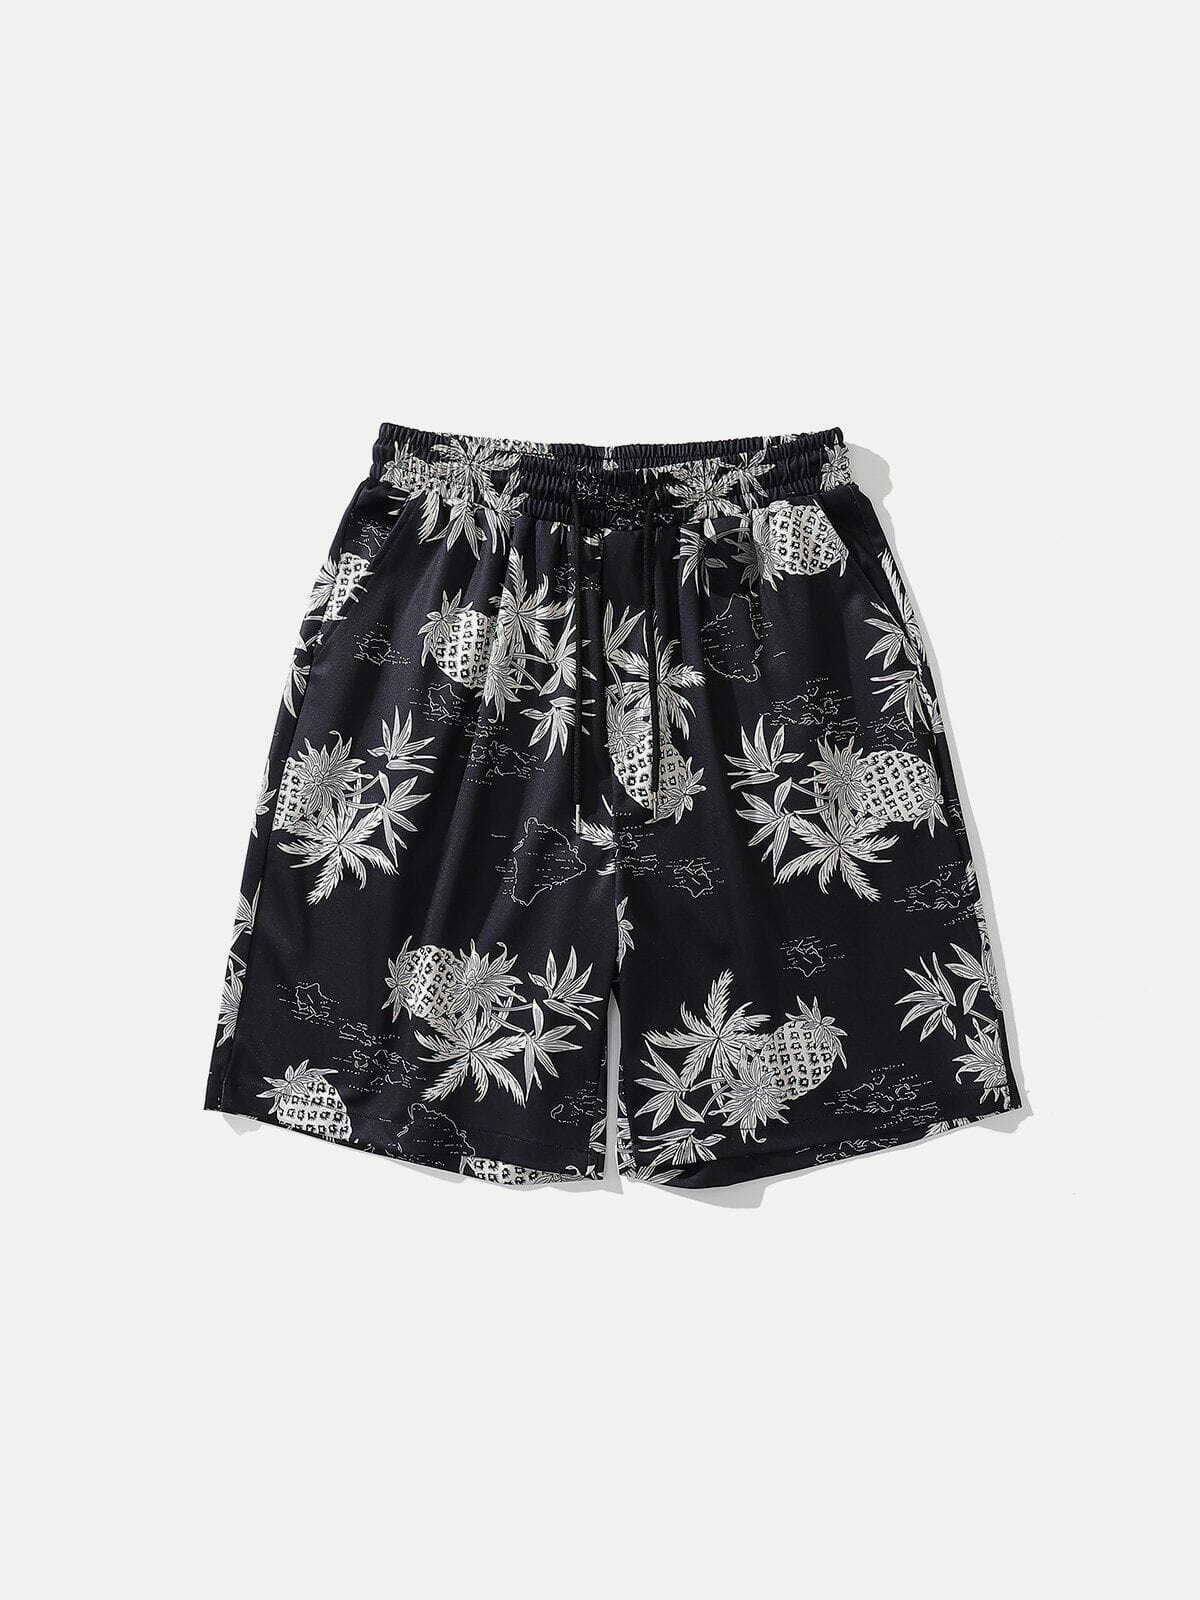 tropical print beach shorts vibrant y2k nostalgia 4905